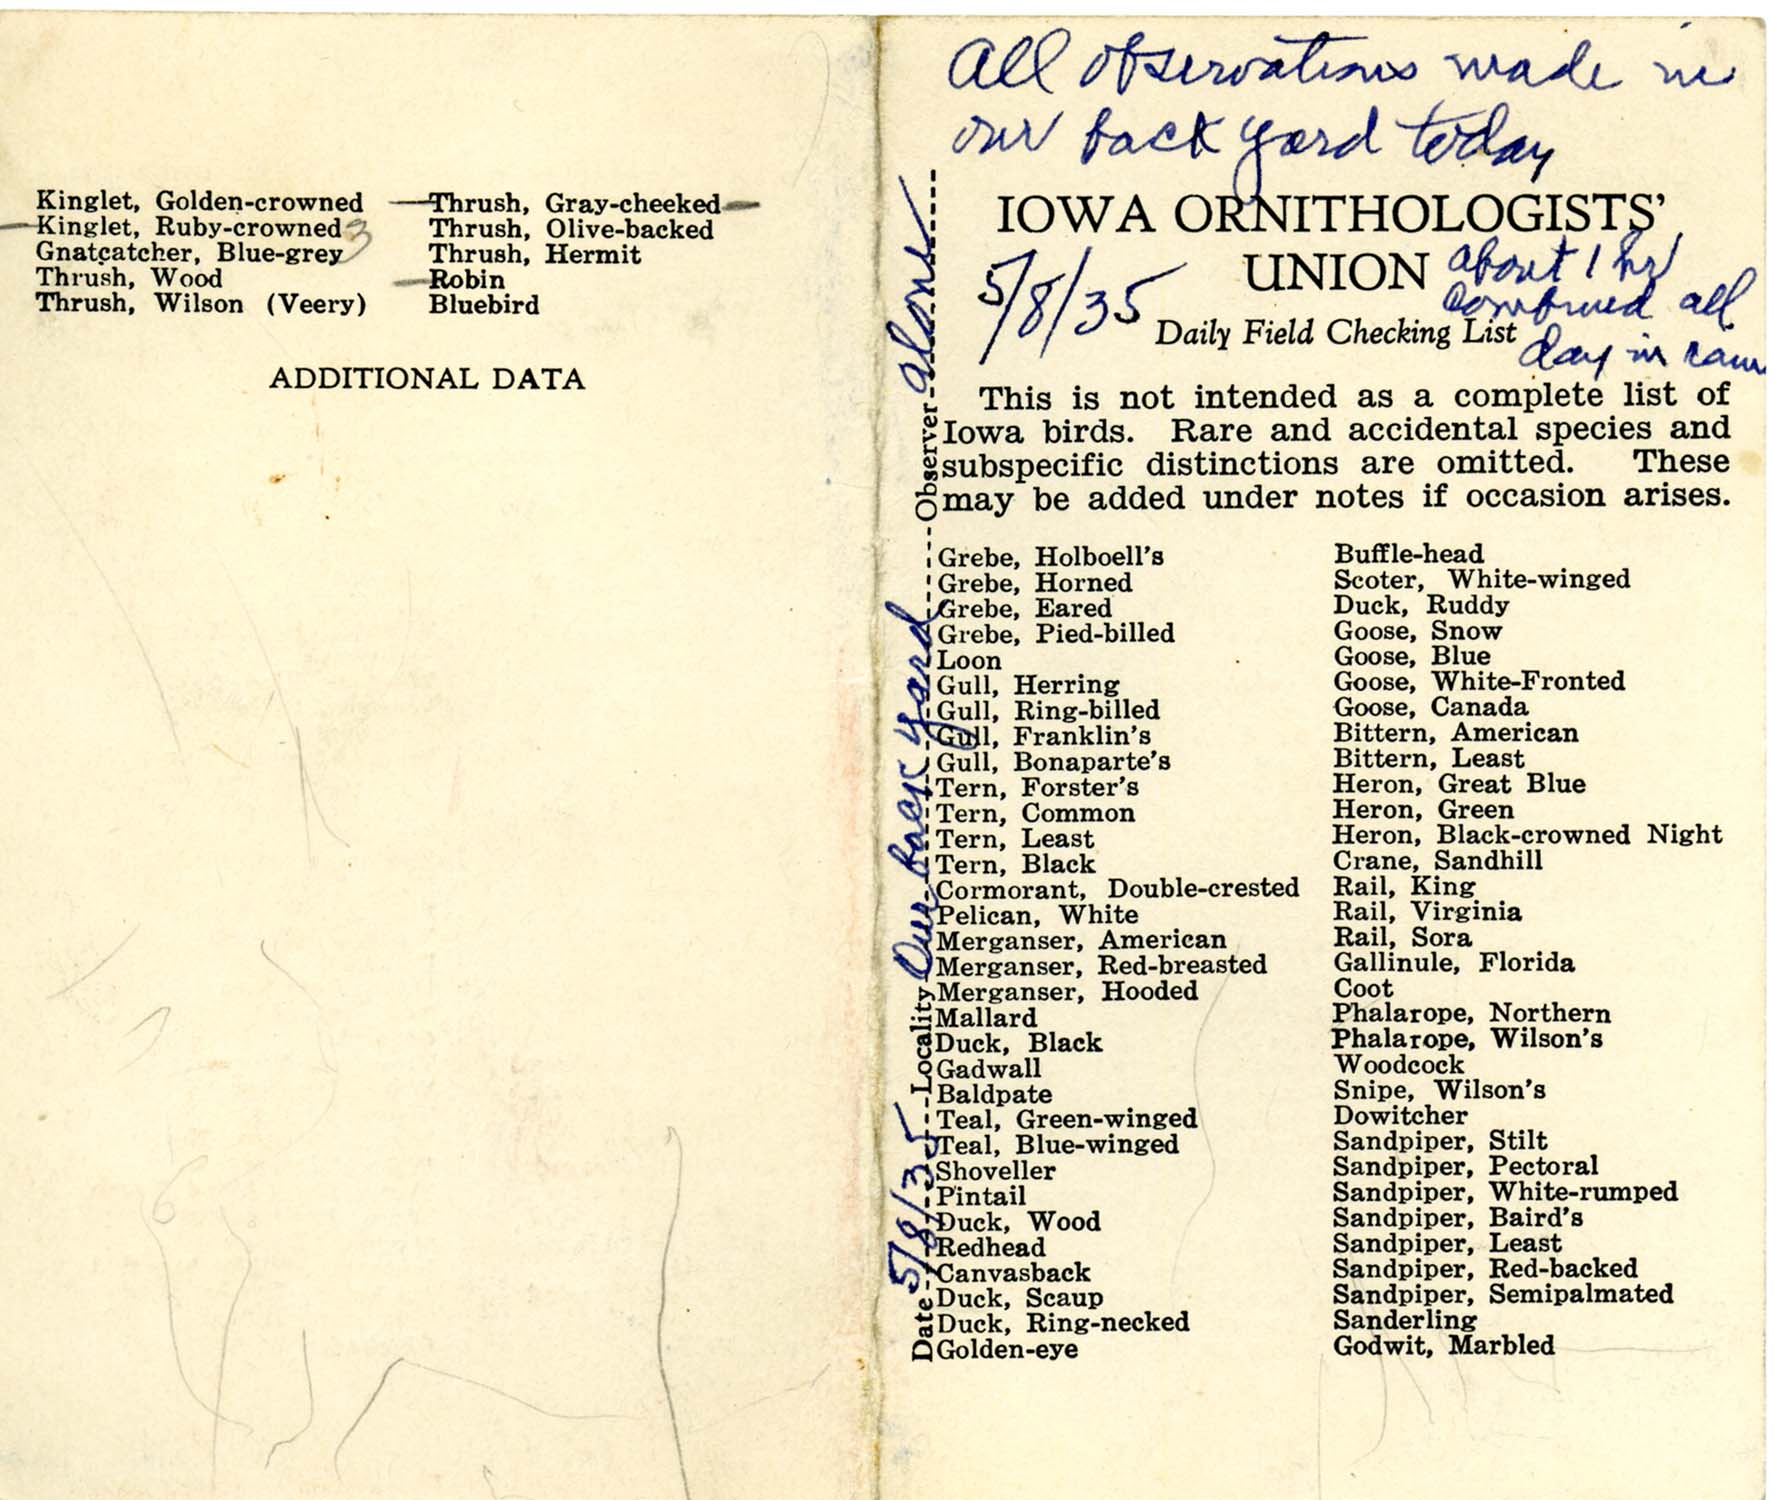 Daily field checking list, Walter Rosene, May 8, 1935